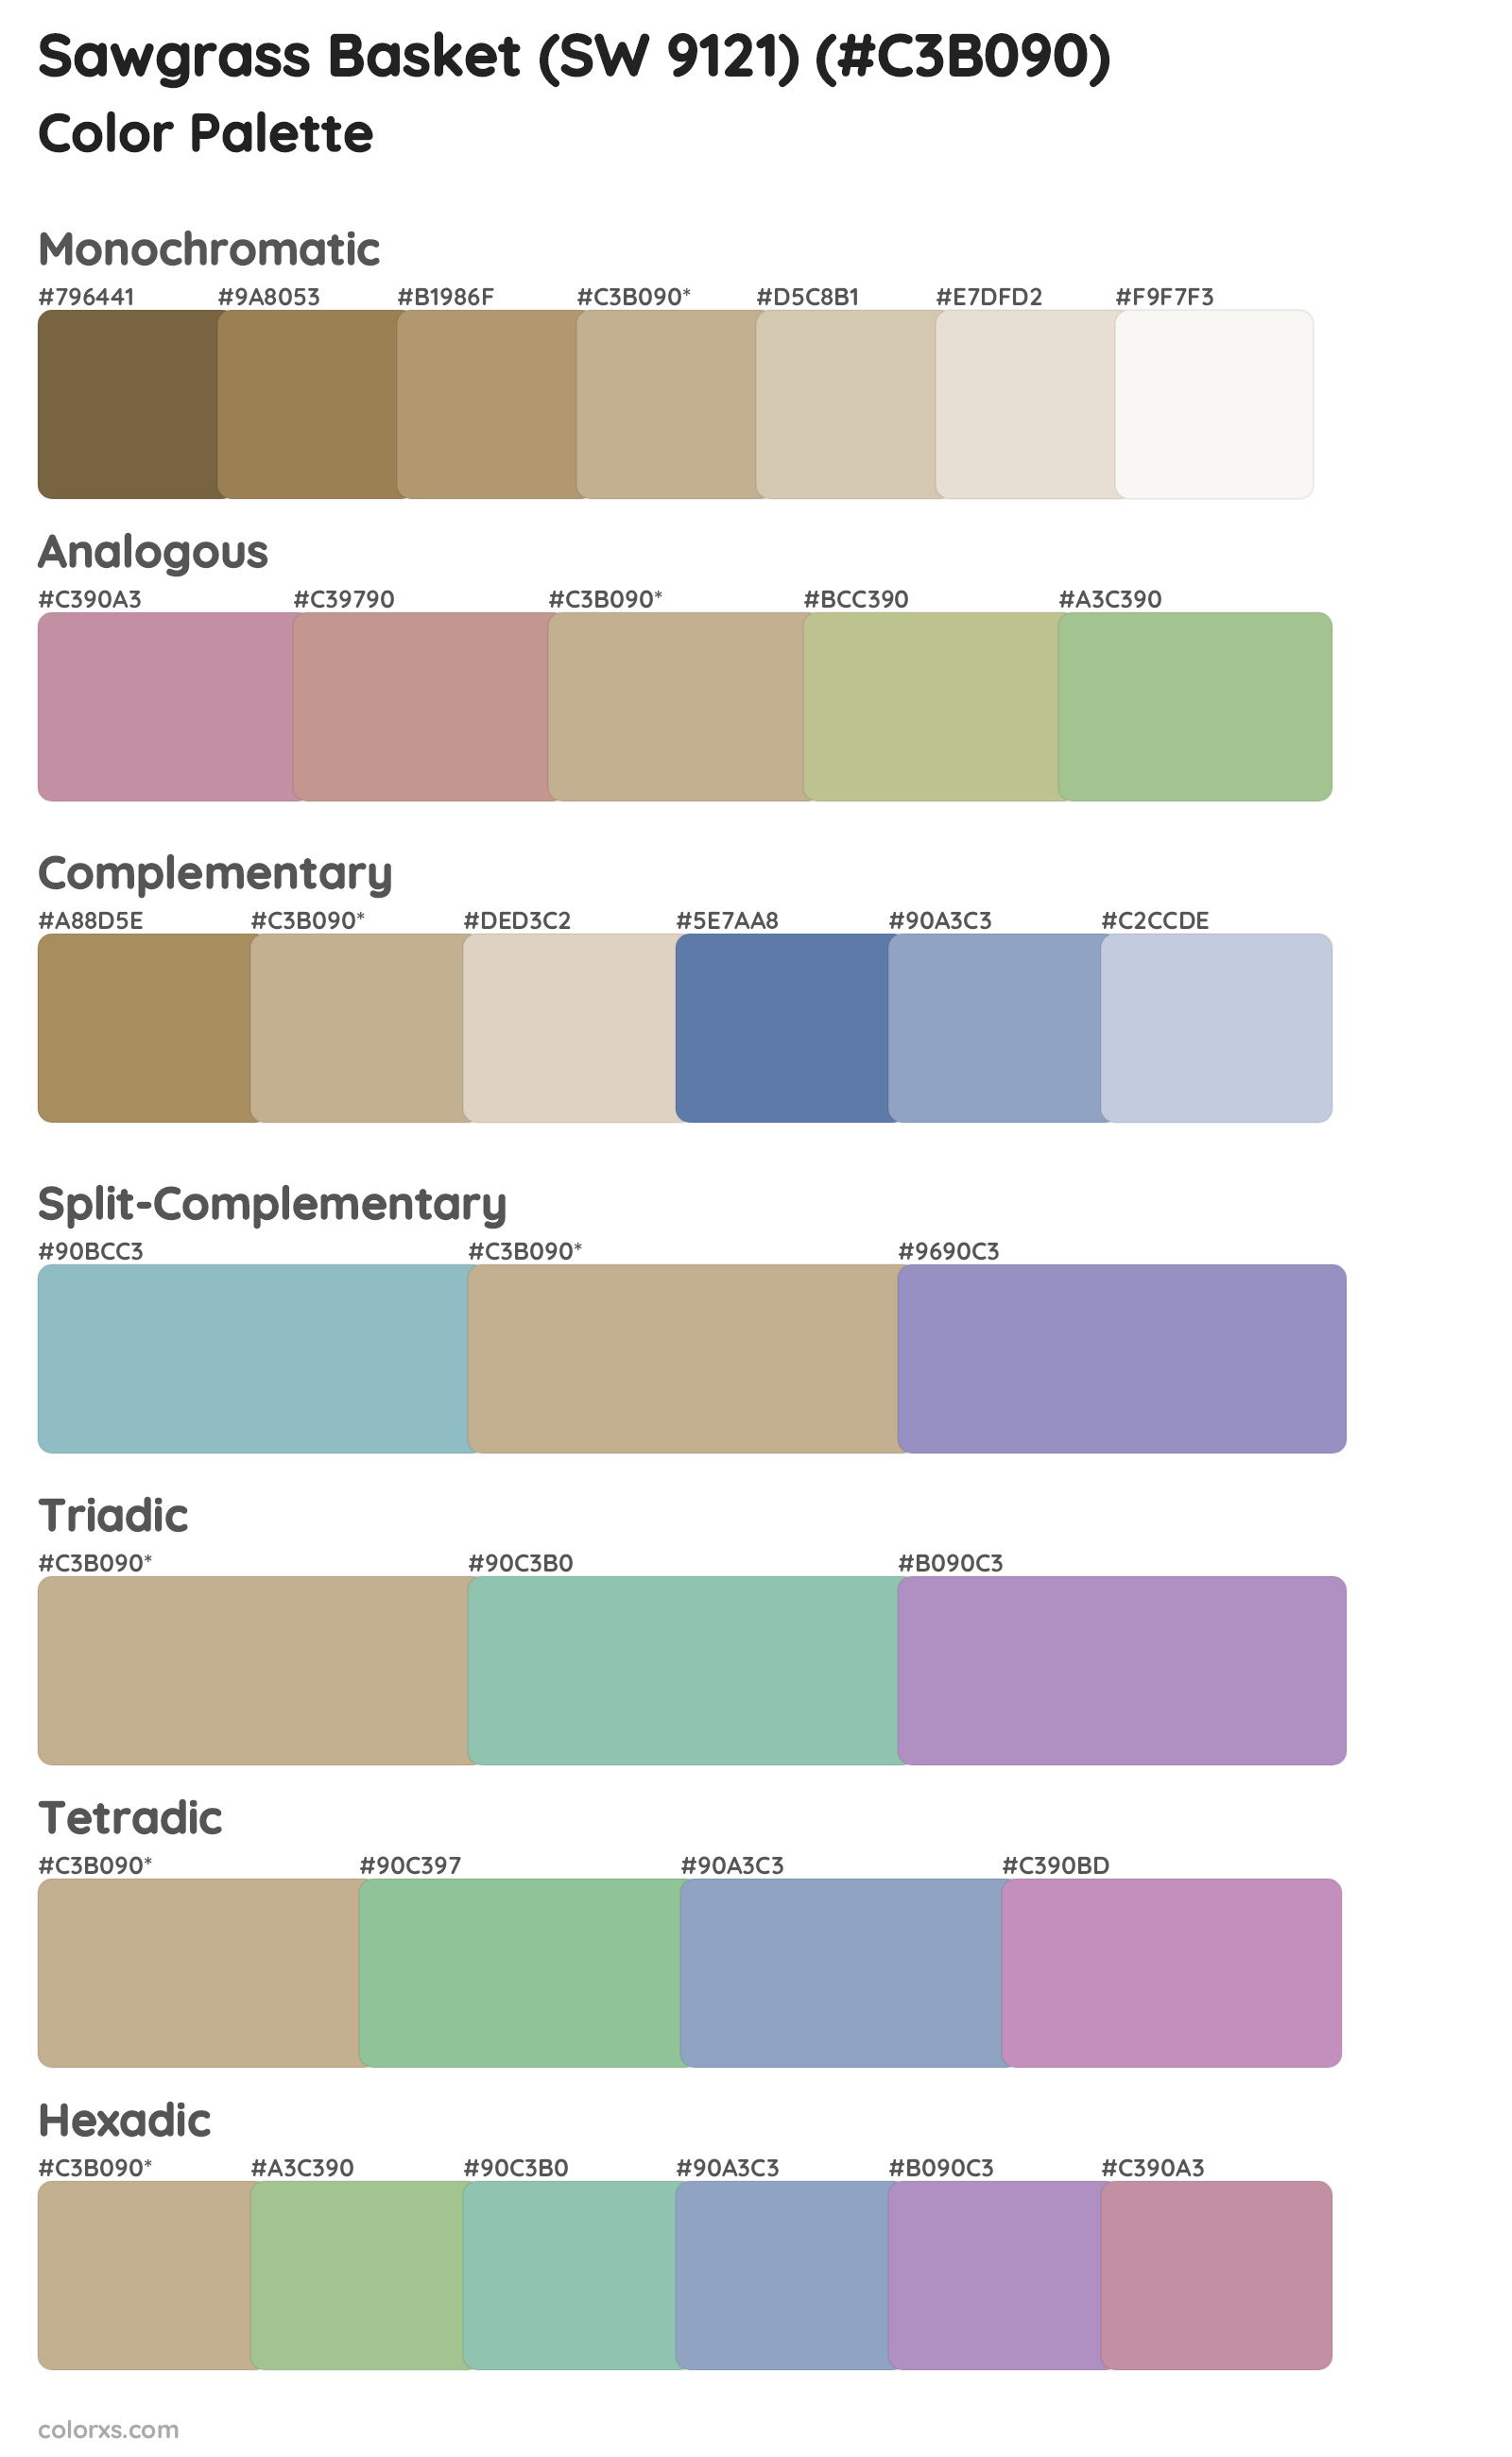 Sawgrass Basket (SW 9121) Color Scheme Palettes